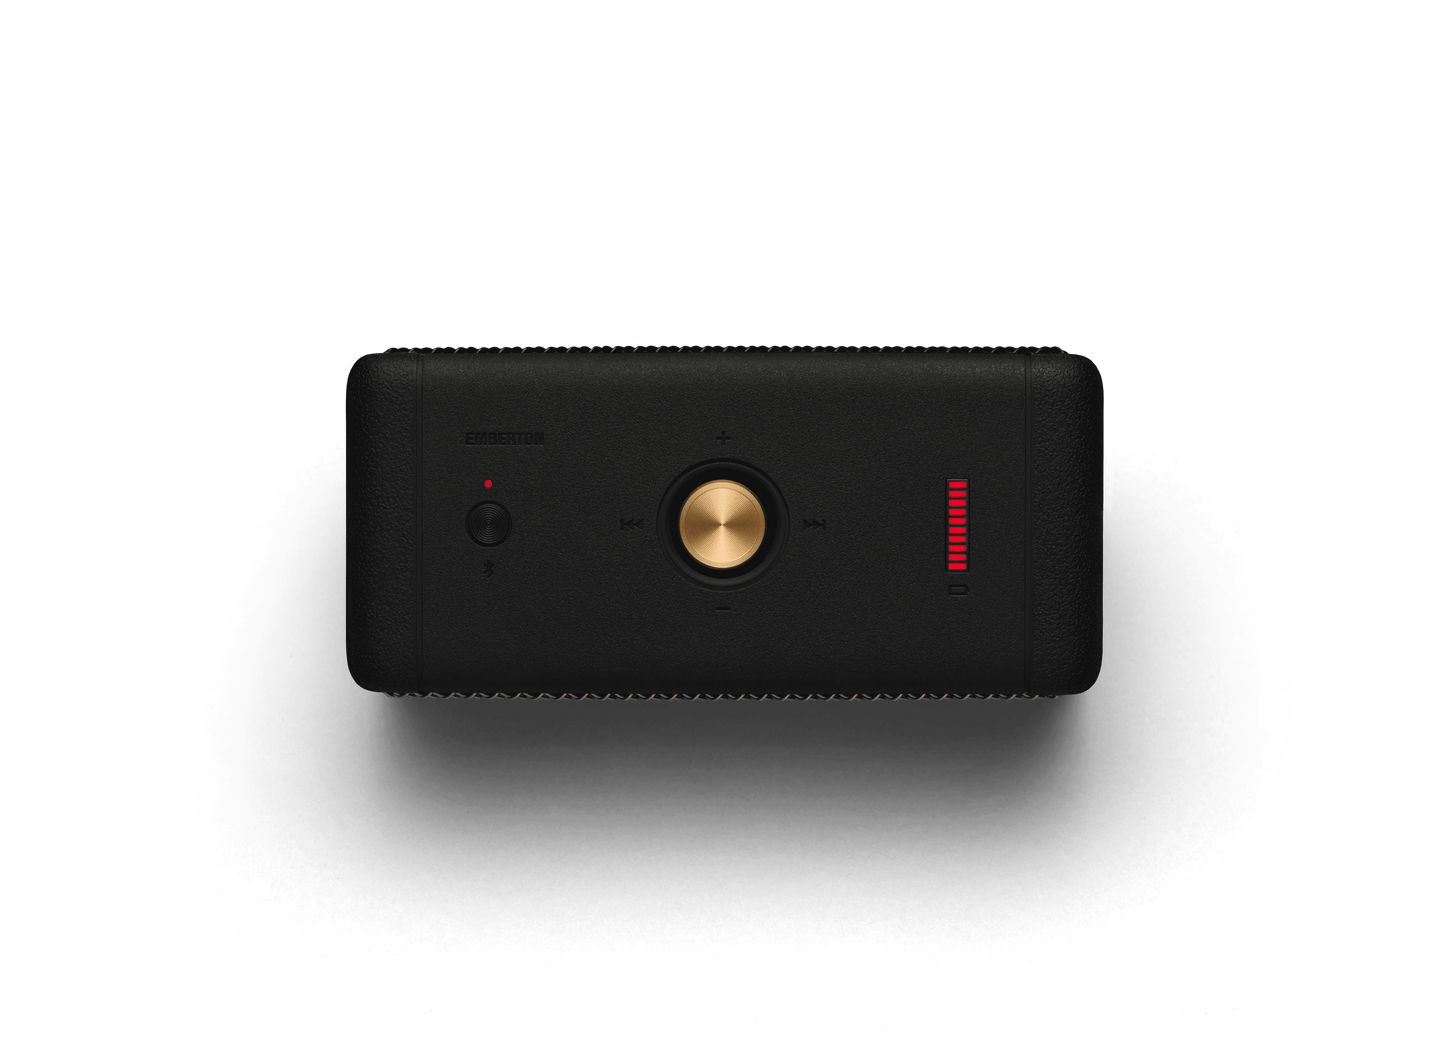 Marshall Emberton Portable Bt Speaker Black